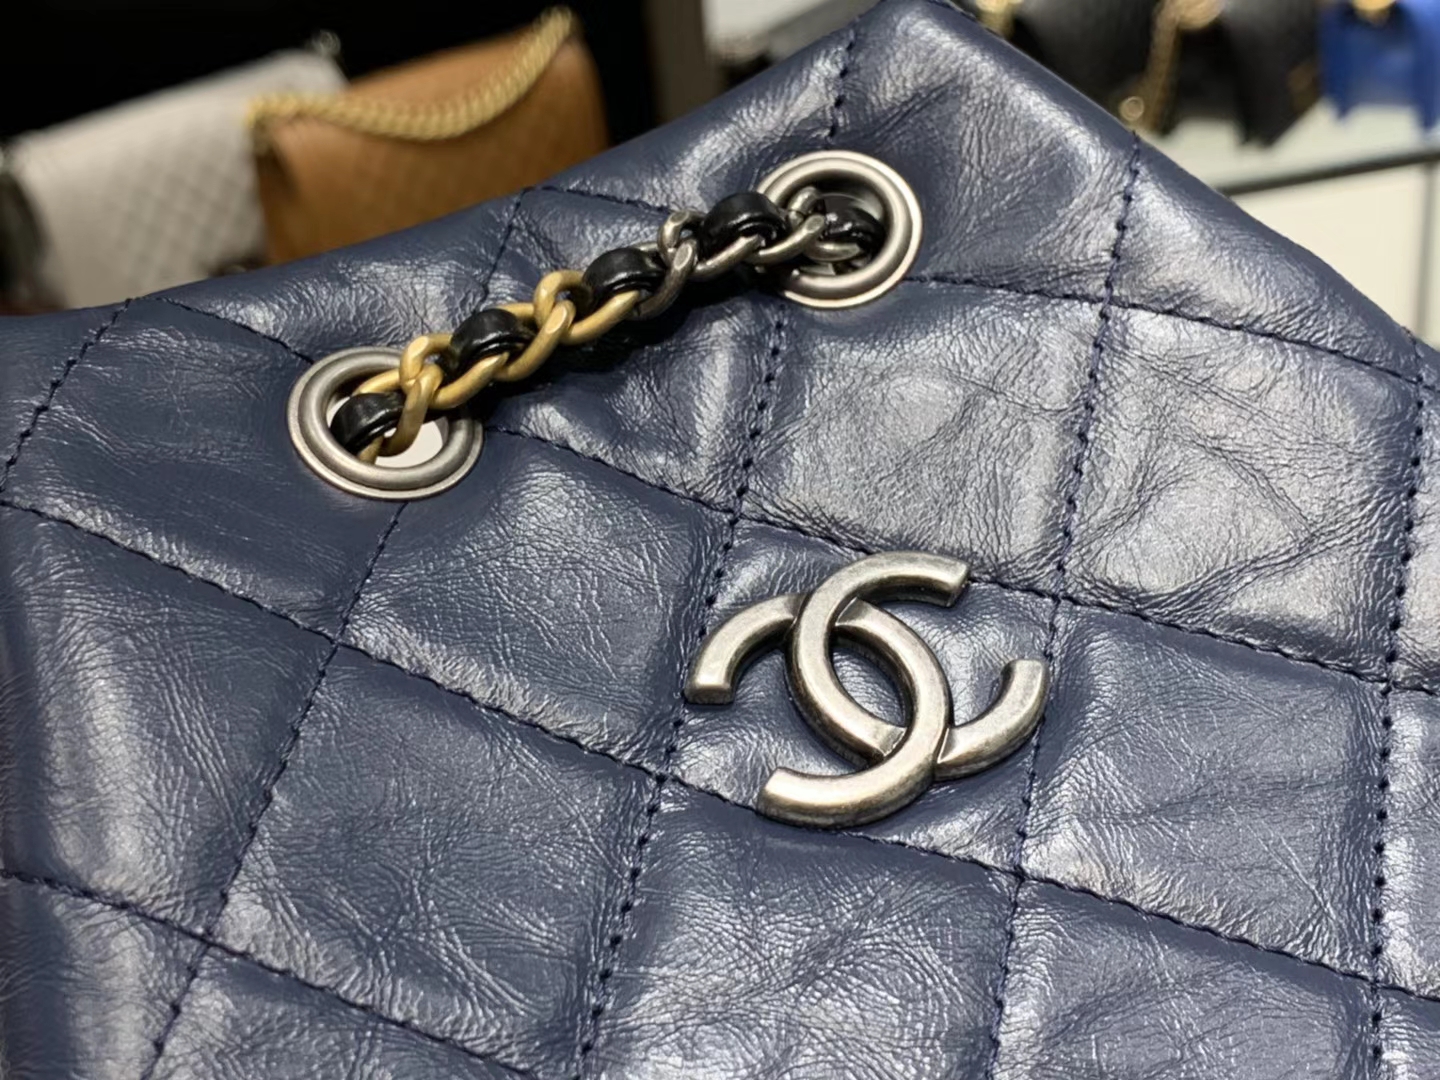 Chanel（香奈儿）????????? # 流浪背包〔黑配蓝菱格〕23×22.5×10.5cm